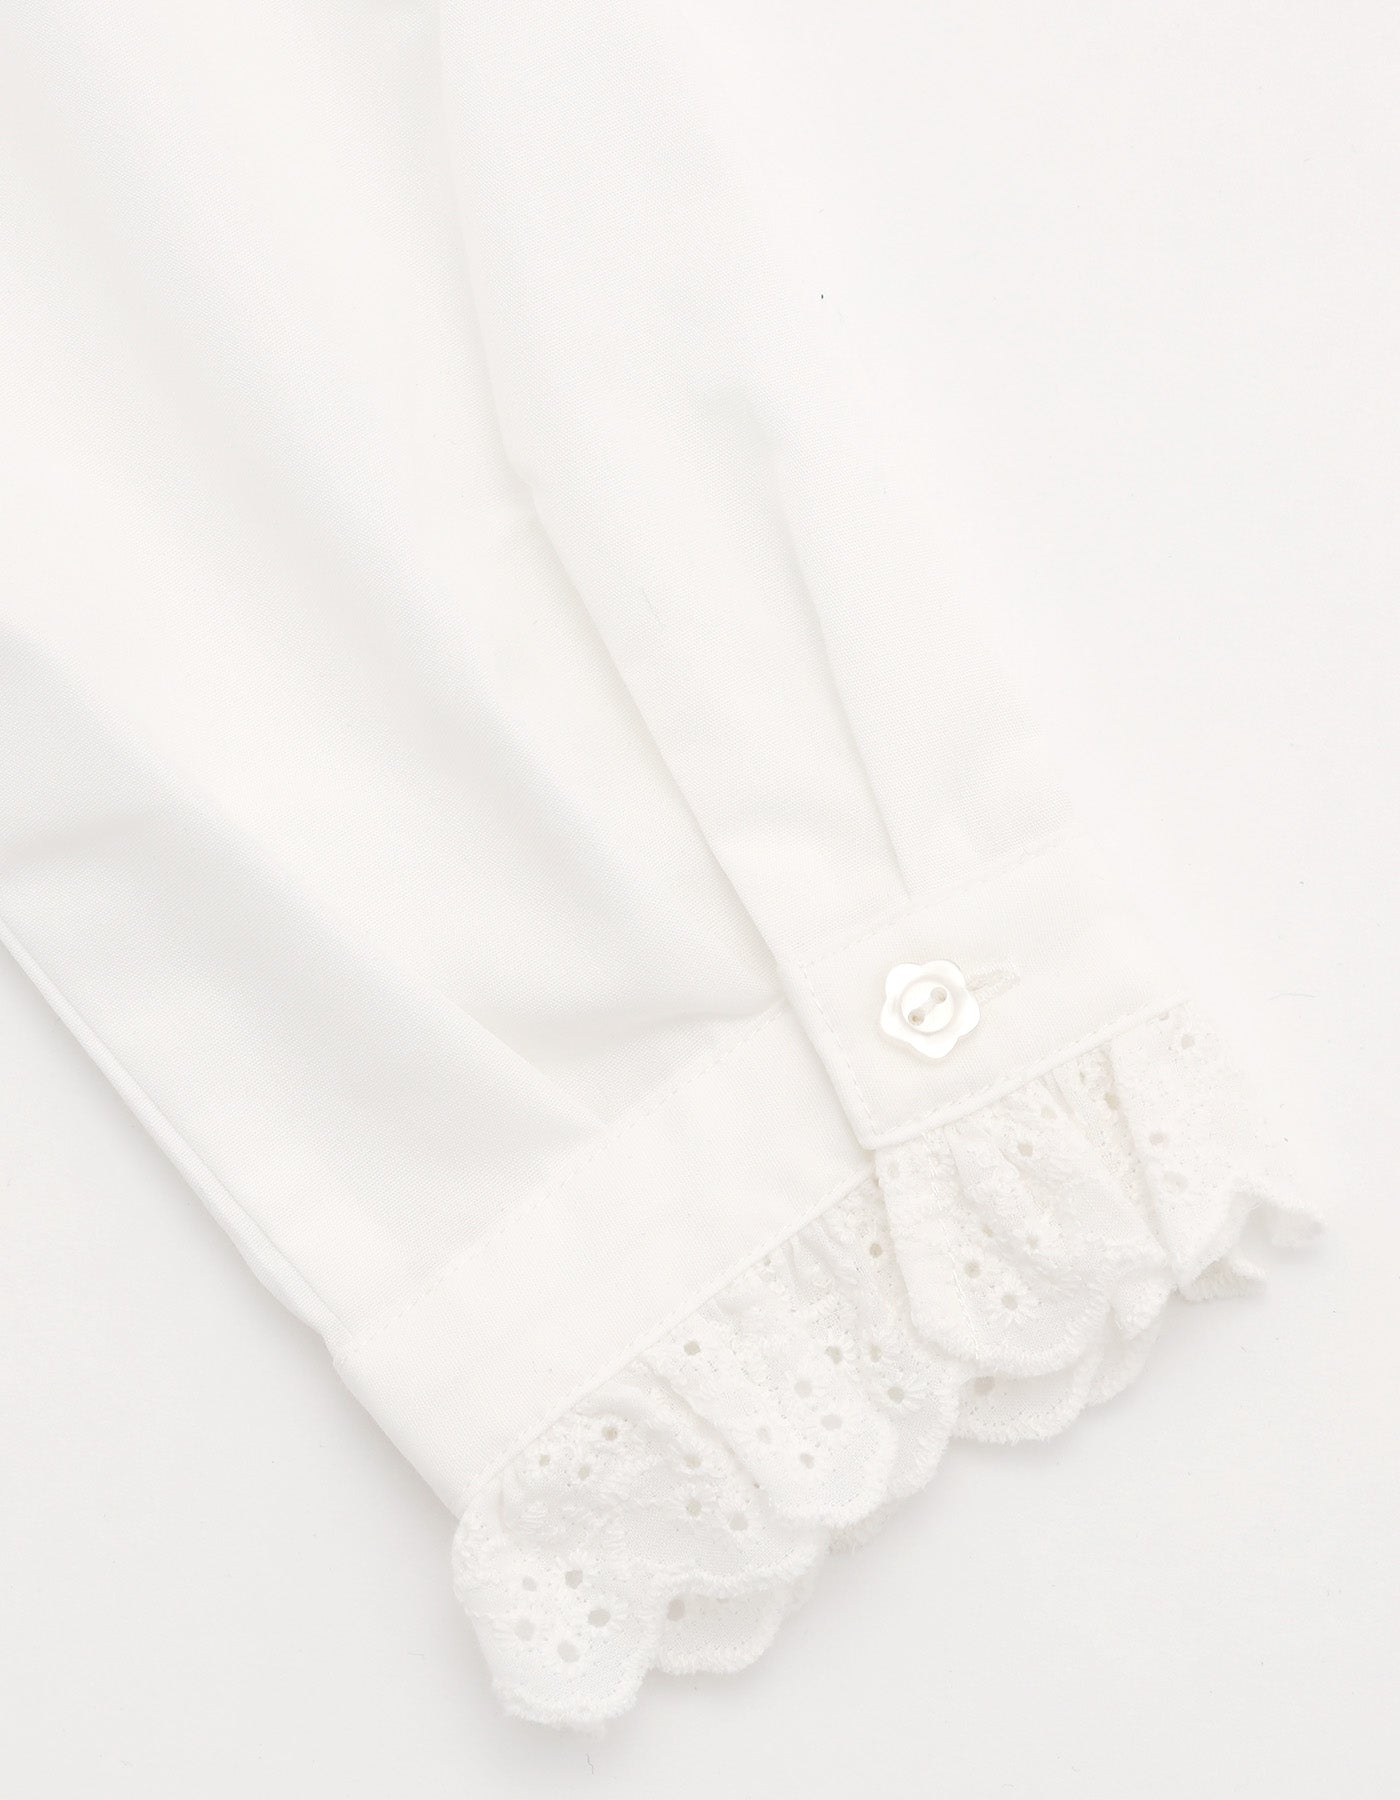 frill blouse / WHITE